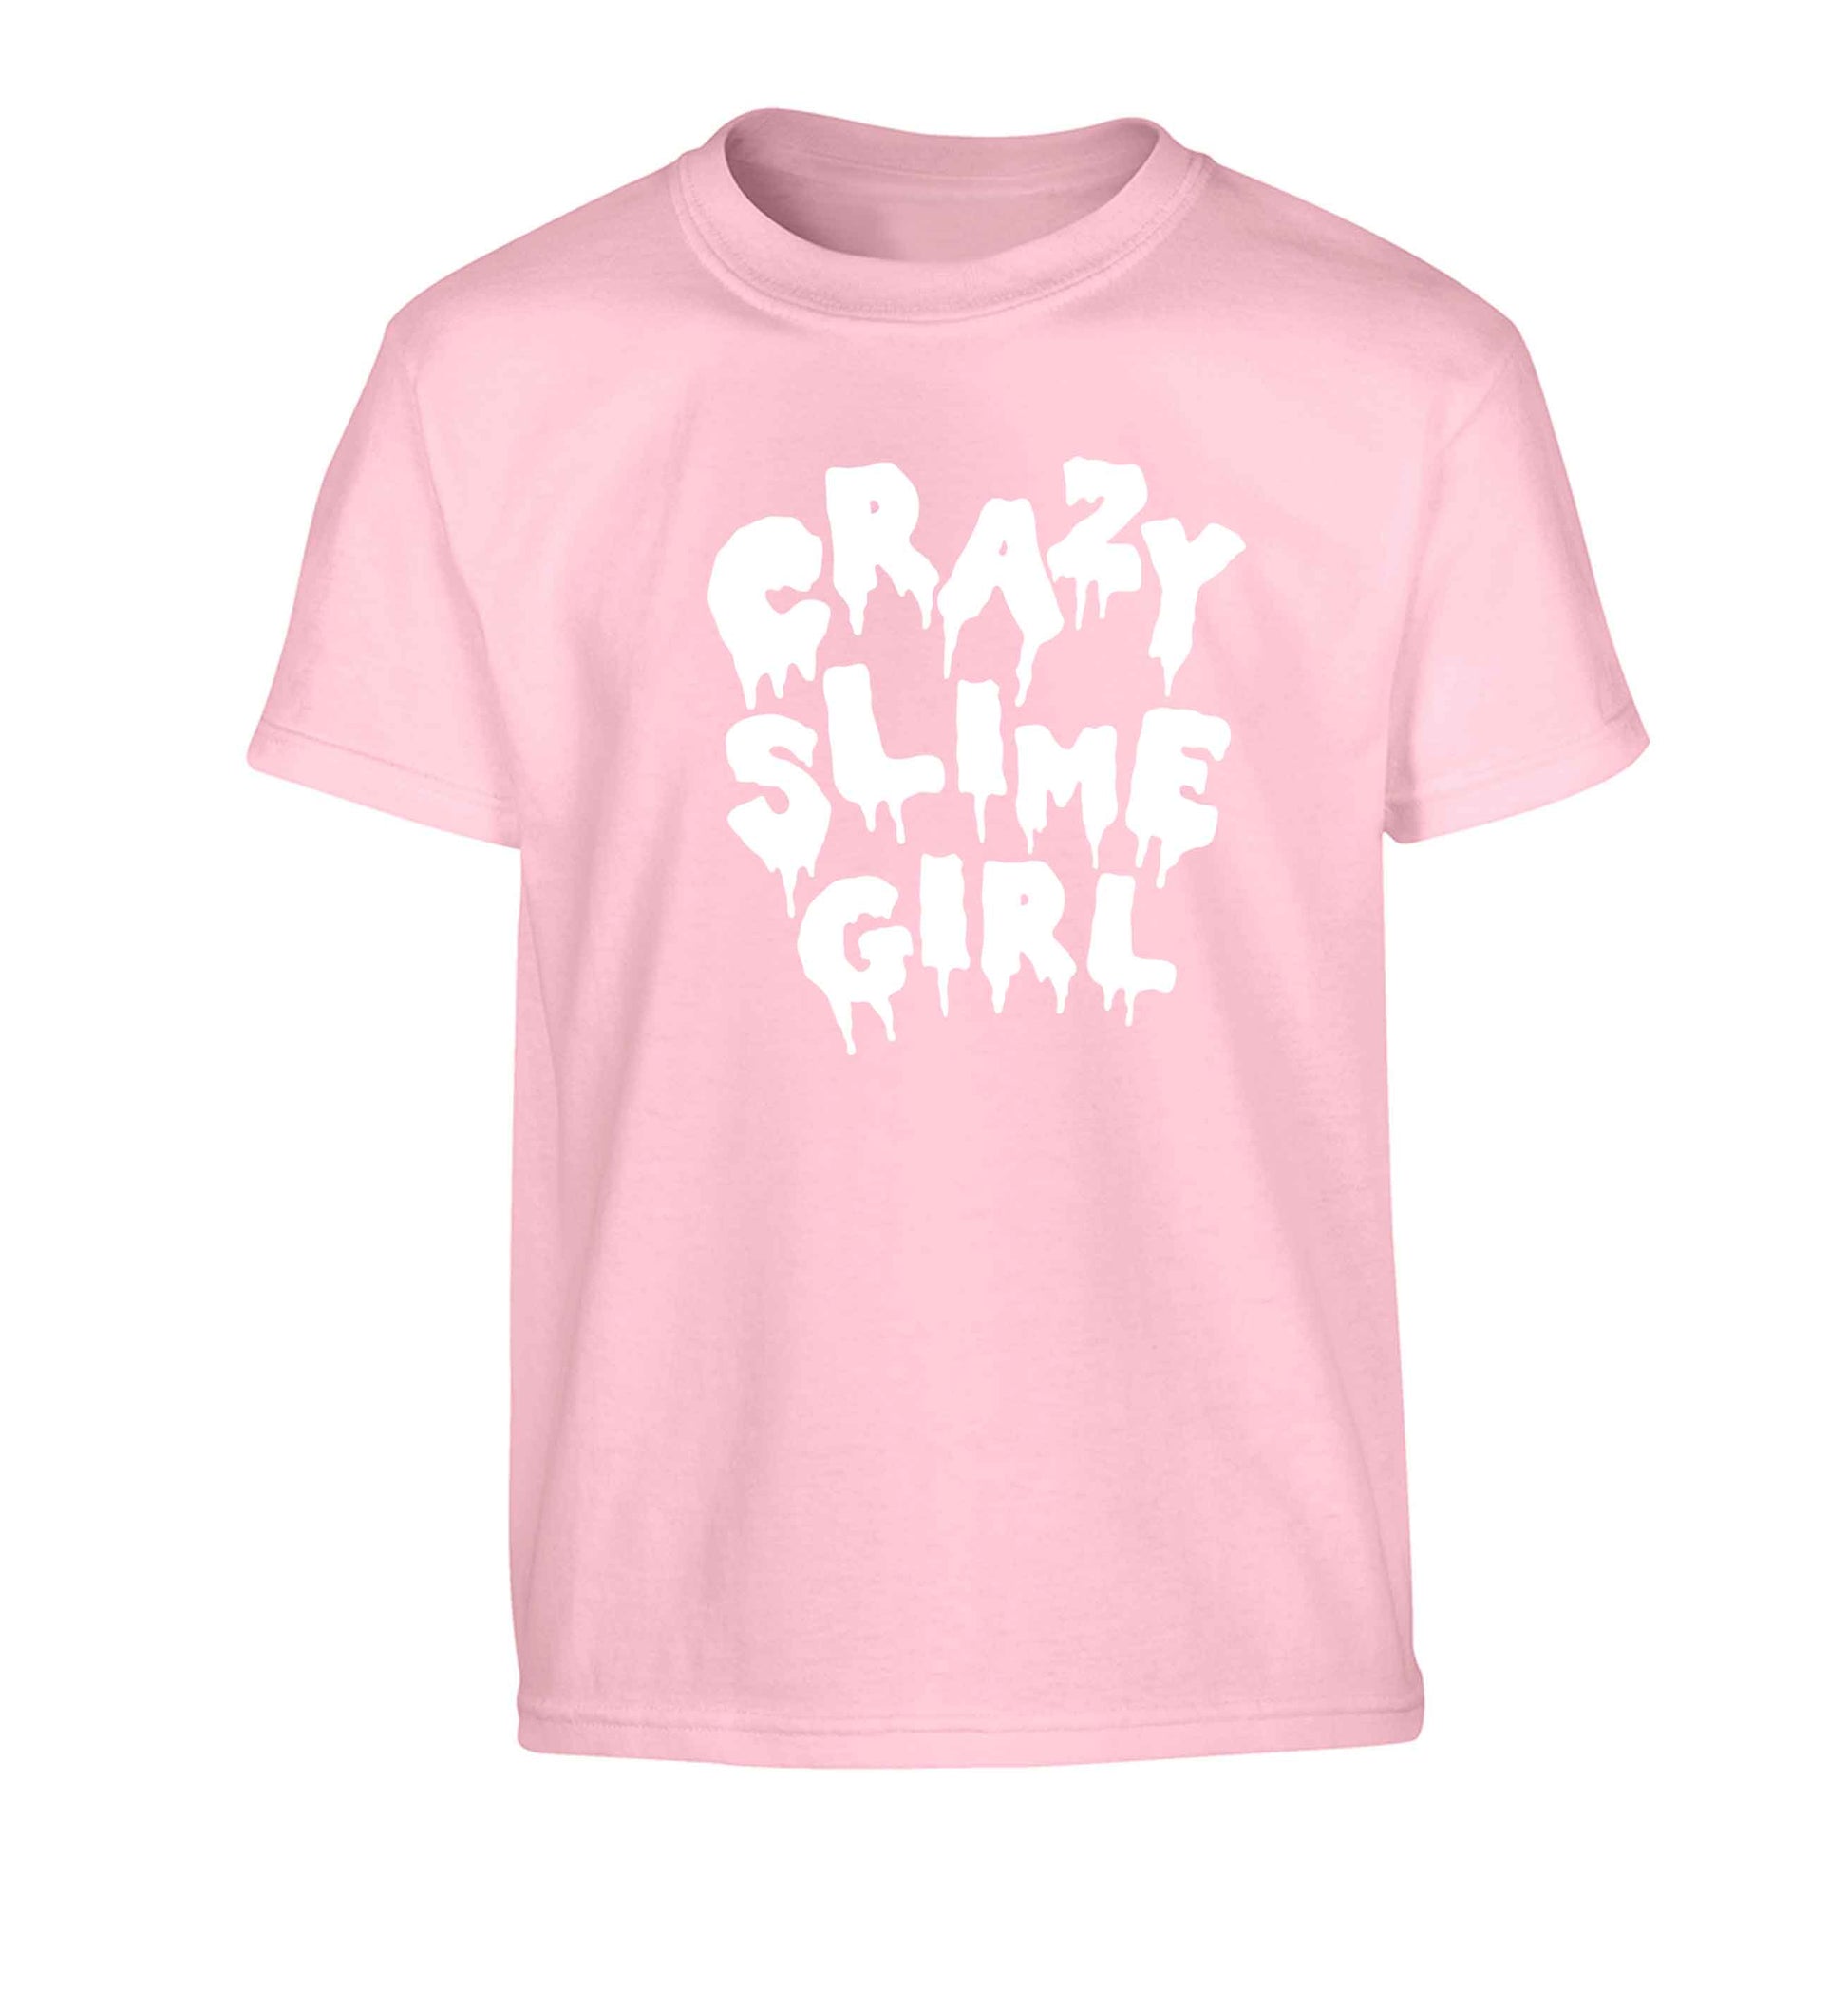 Crazy slime girl Children's light pink Tshirt 12-13 Years